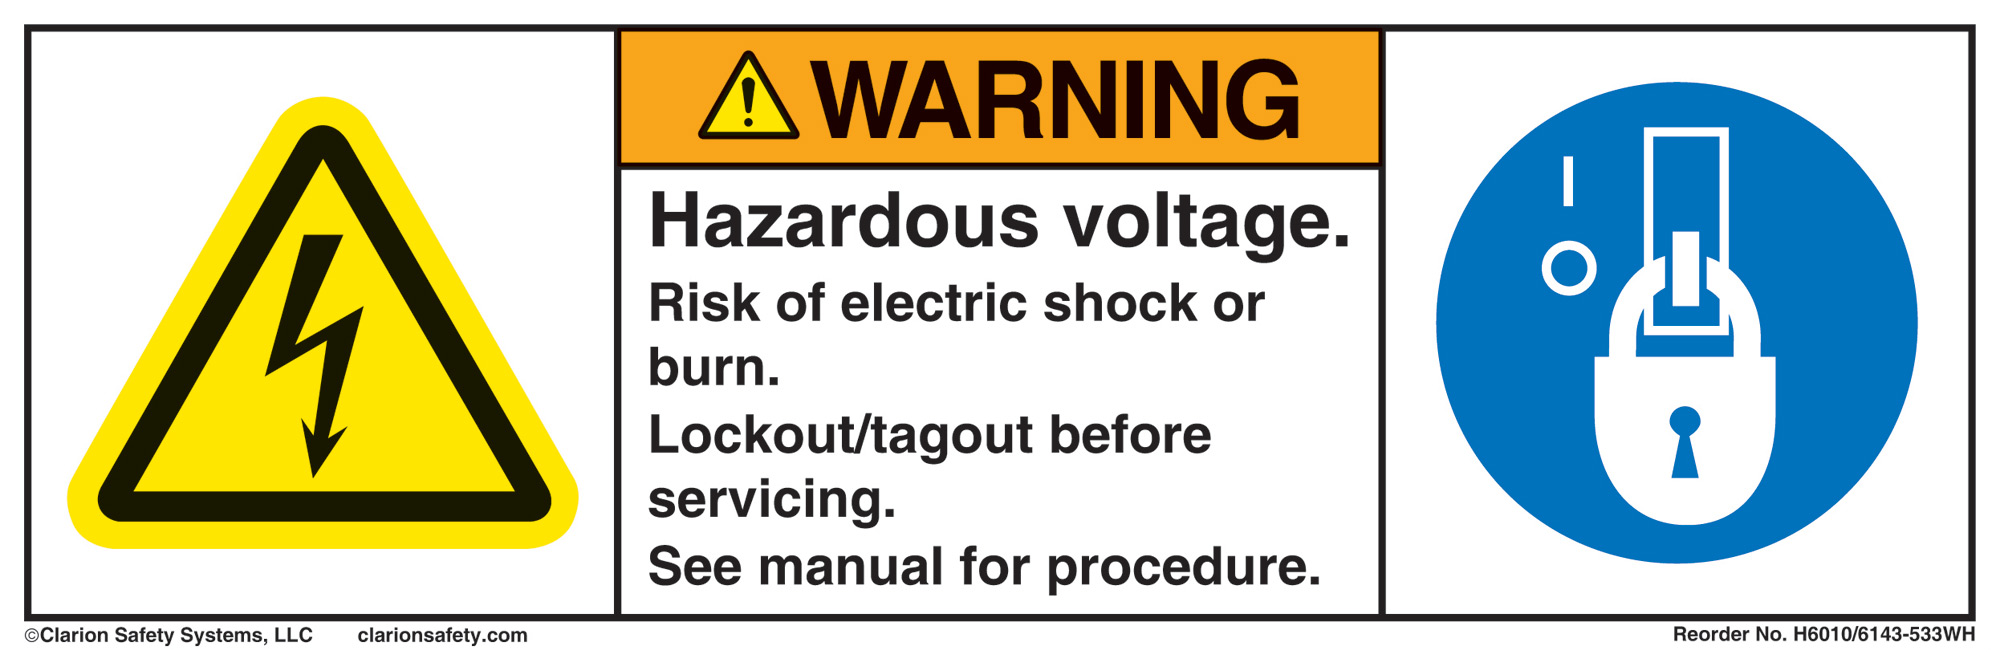 "Hazardous voltage" warning label